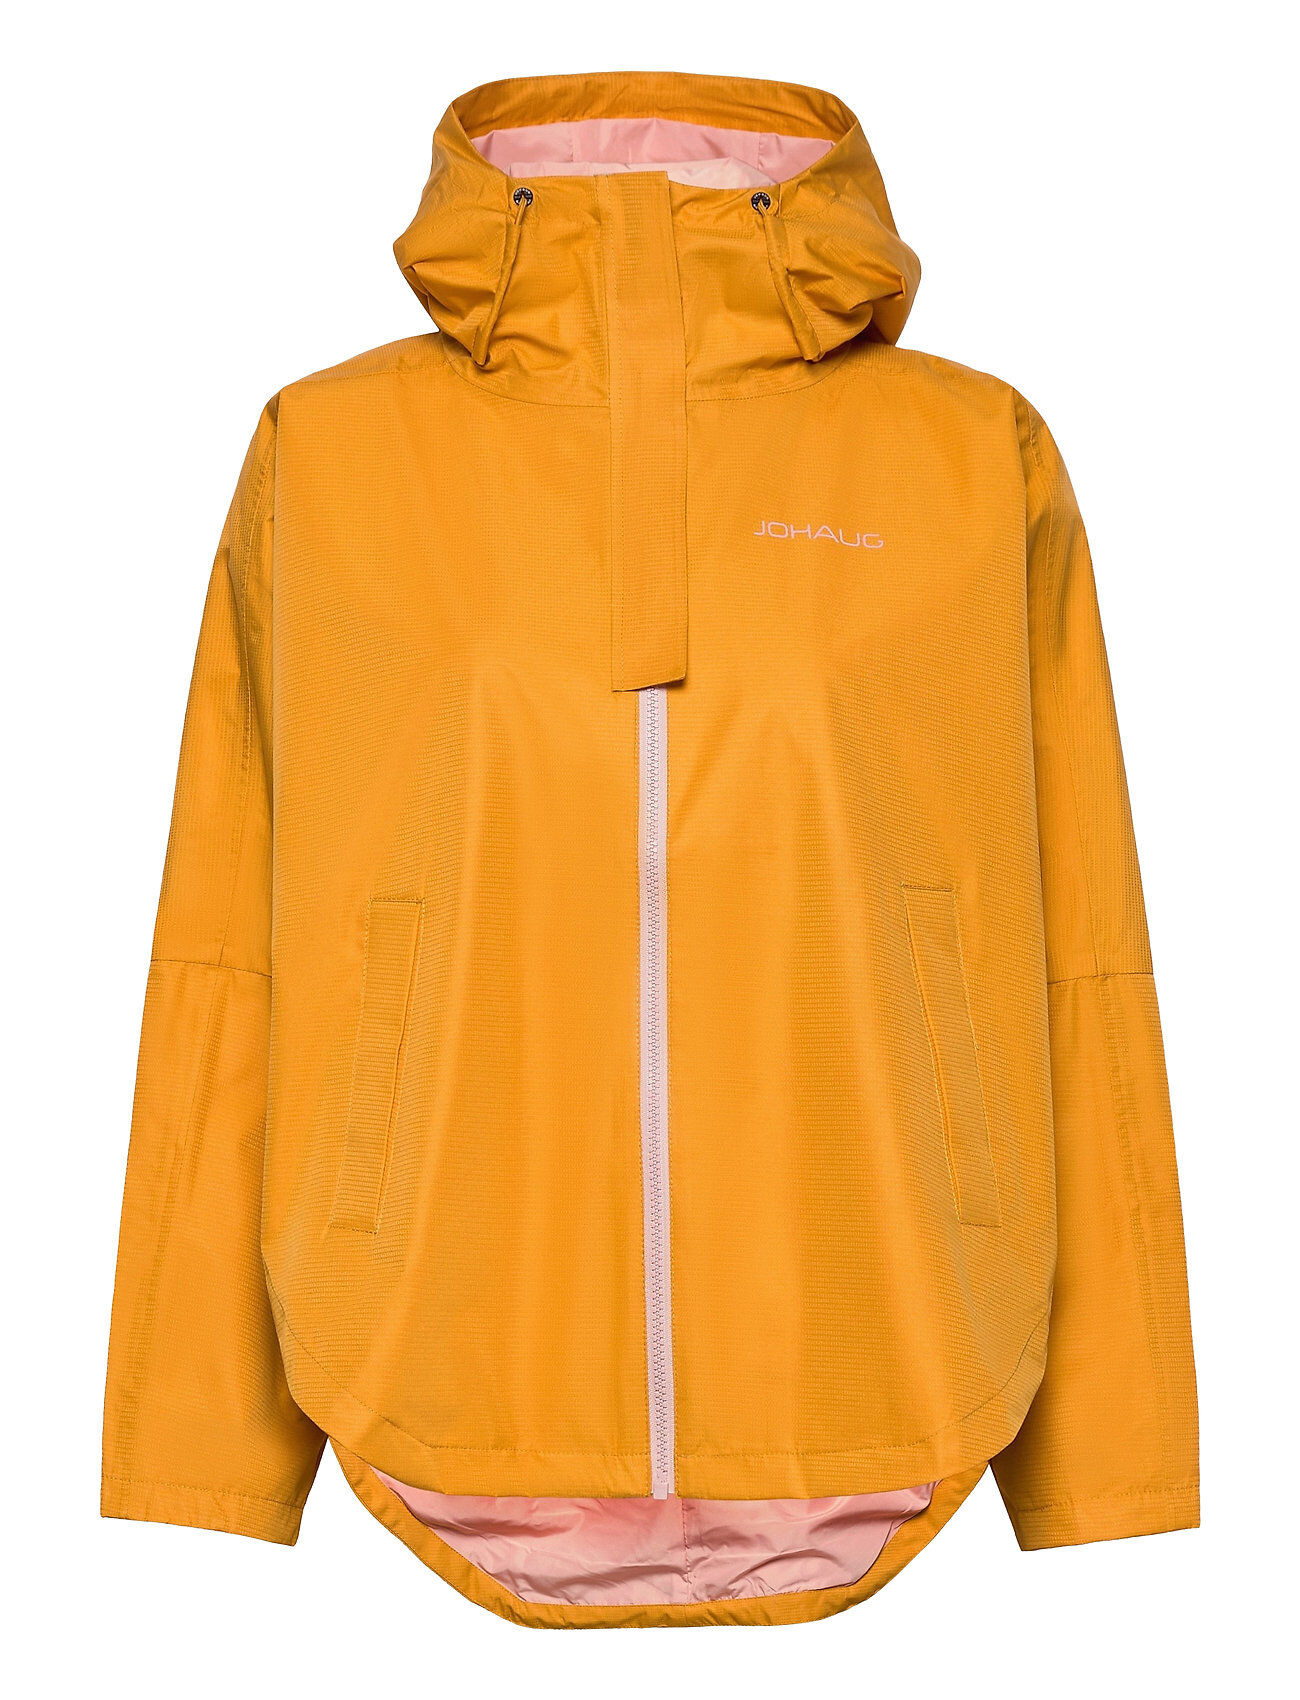 Johaug Silhouette Poncho Jacket Outerwear Sport Jackets Oransje Johaug